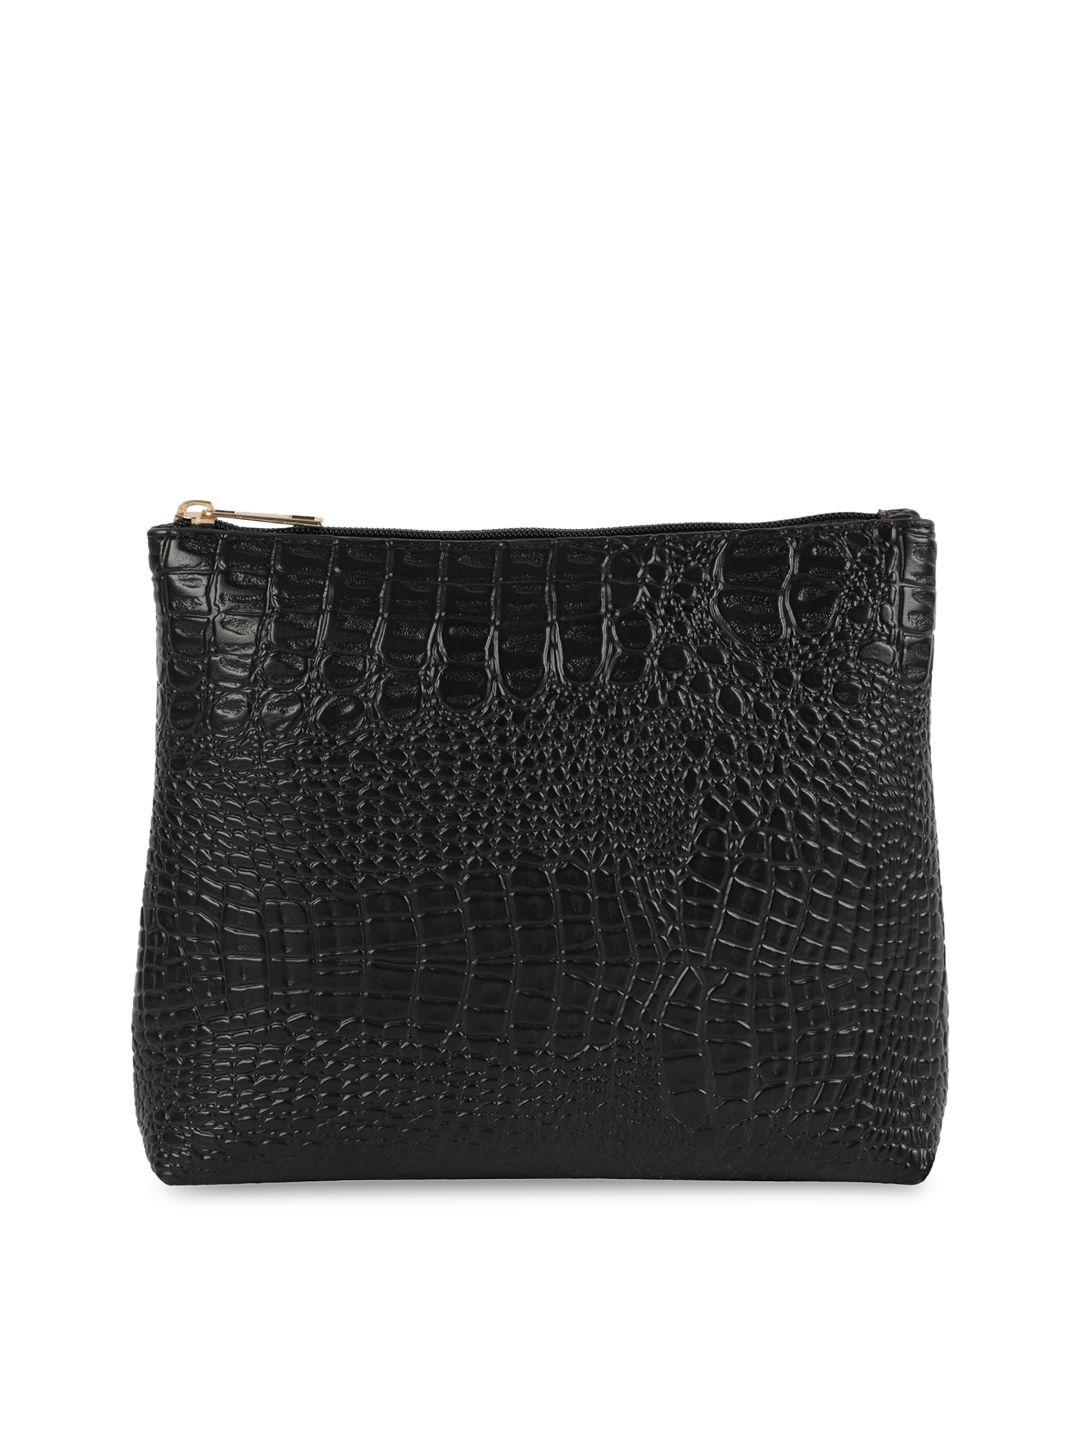 bagsy malone black croc textured purse